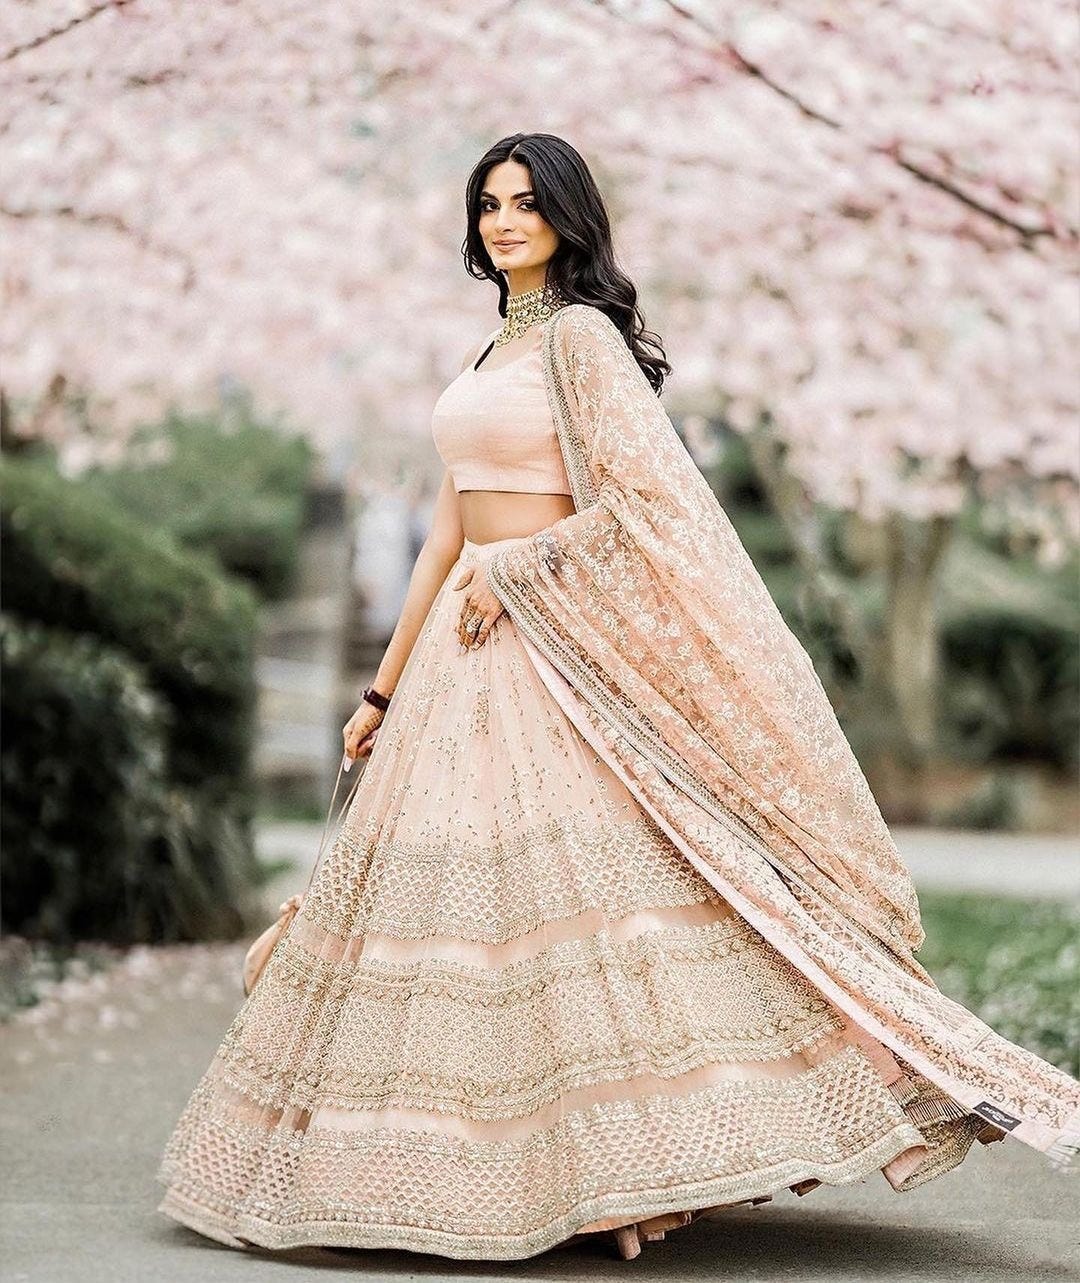 15+ Gold Indian Wedding Dress